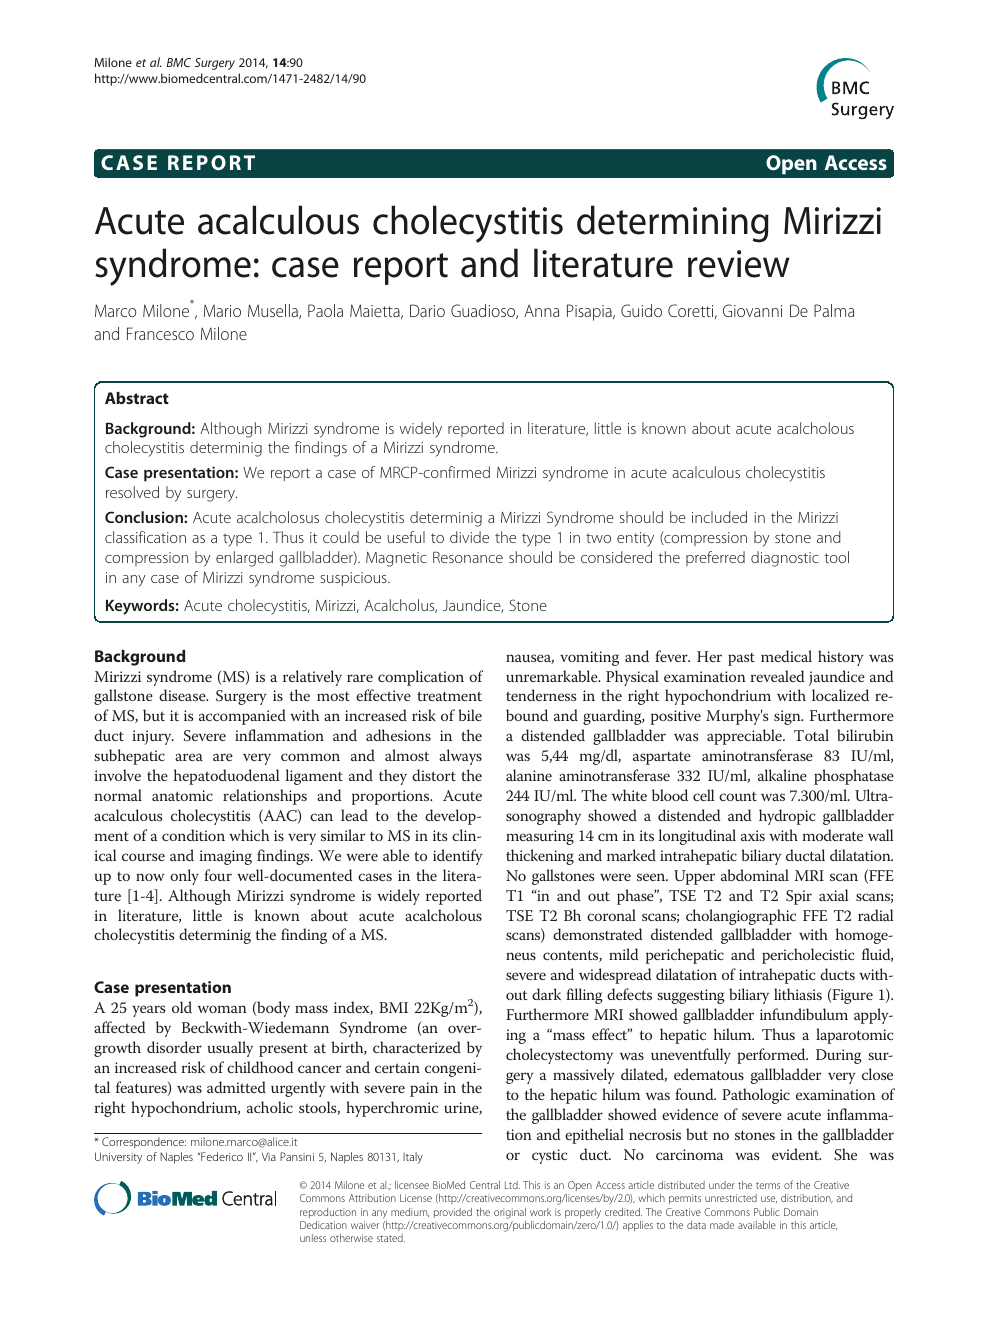 cholecystitis case study